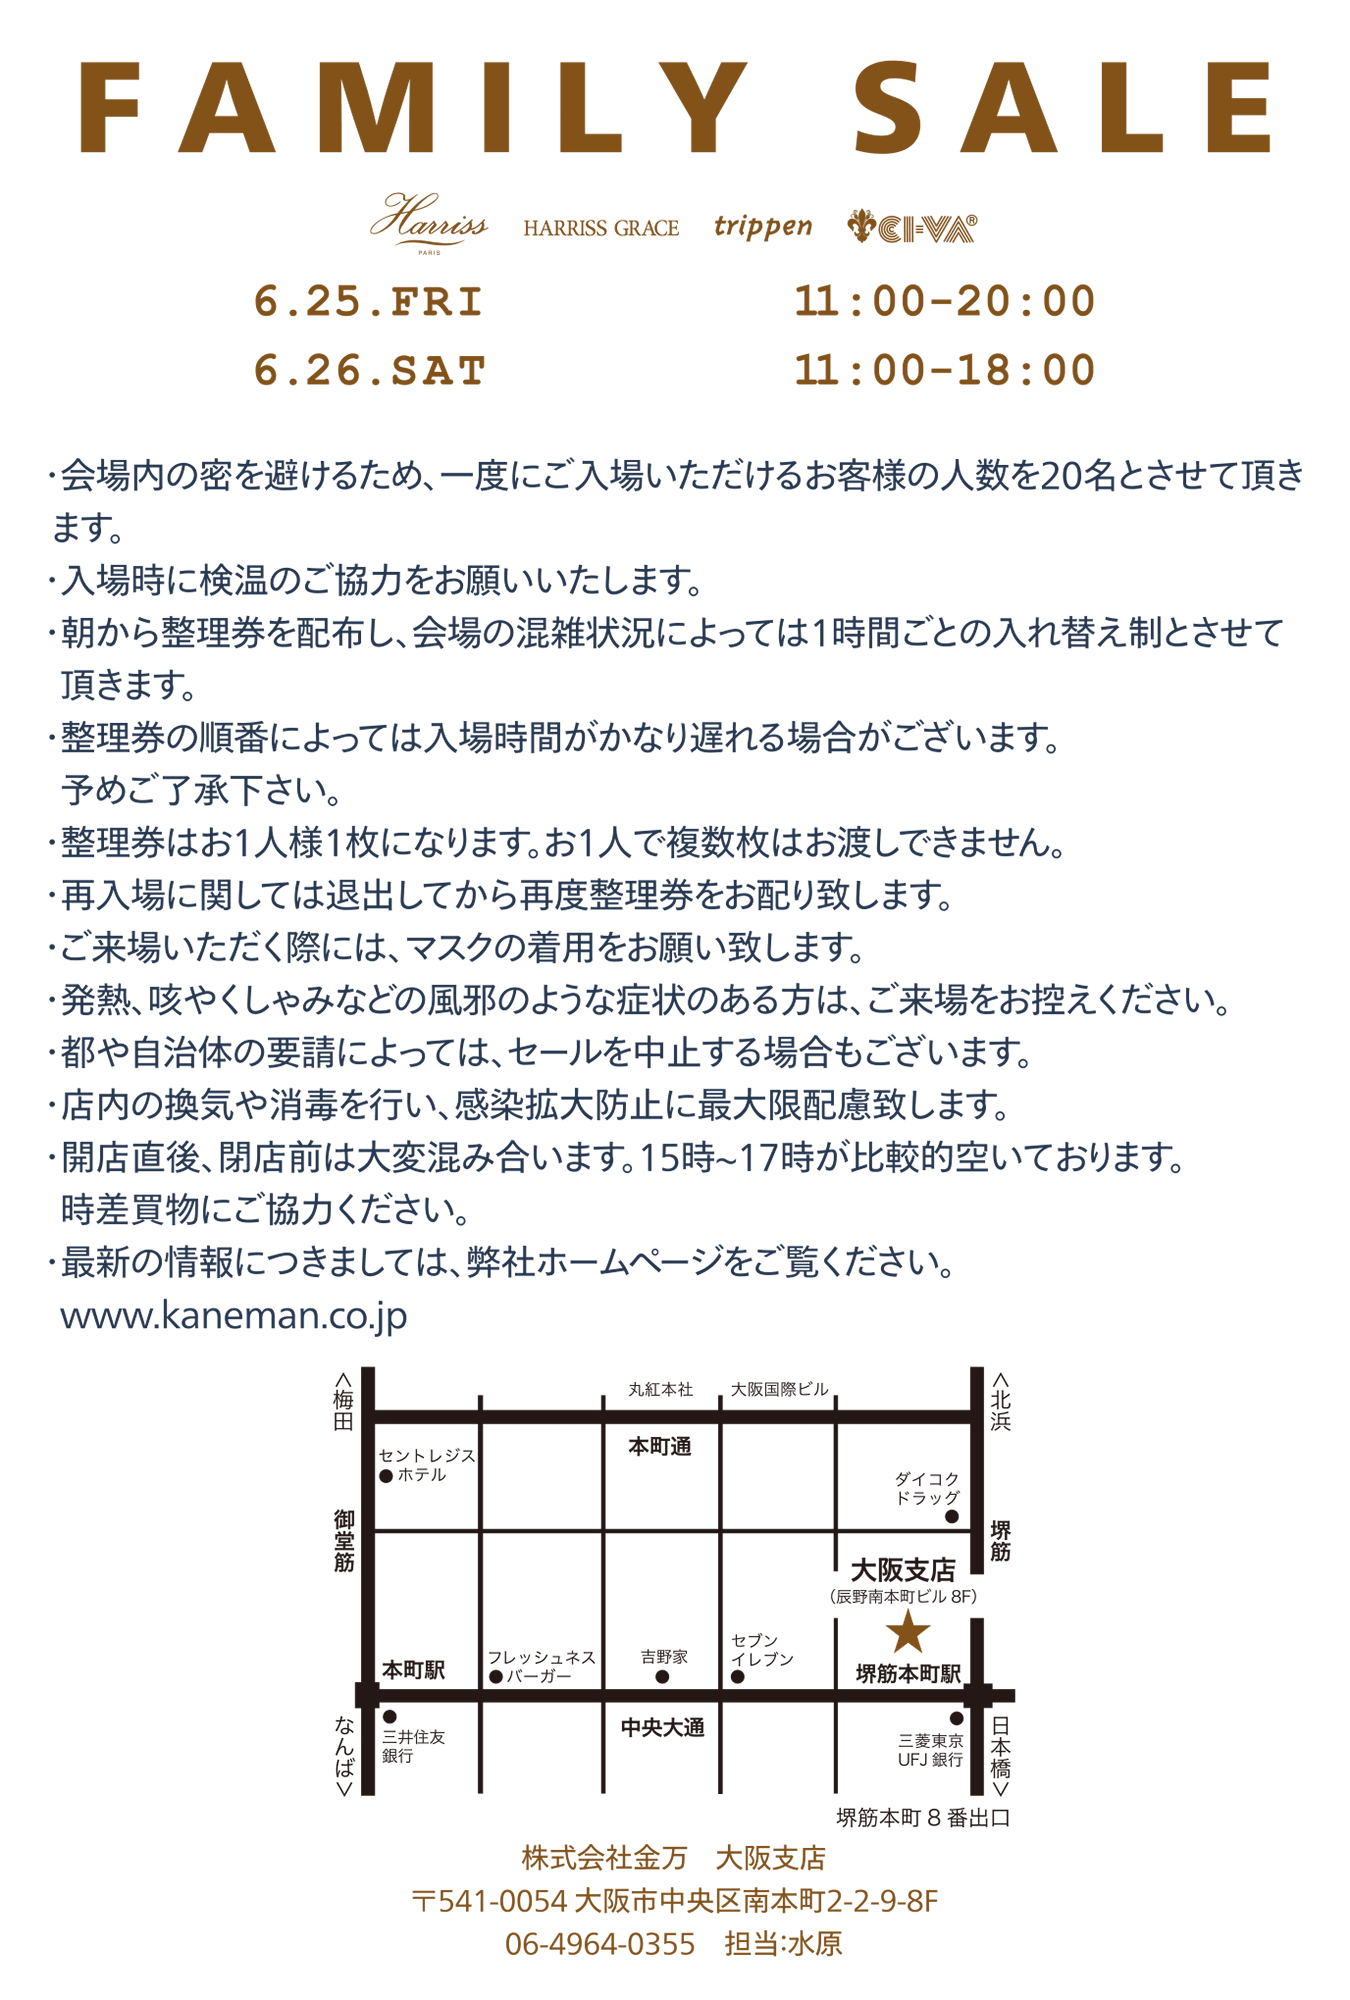 Kaneman Family Sale Osaka開催 Kaneman Co Ltd